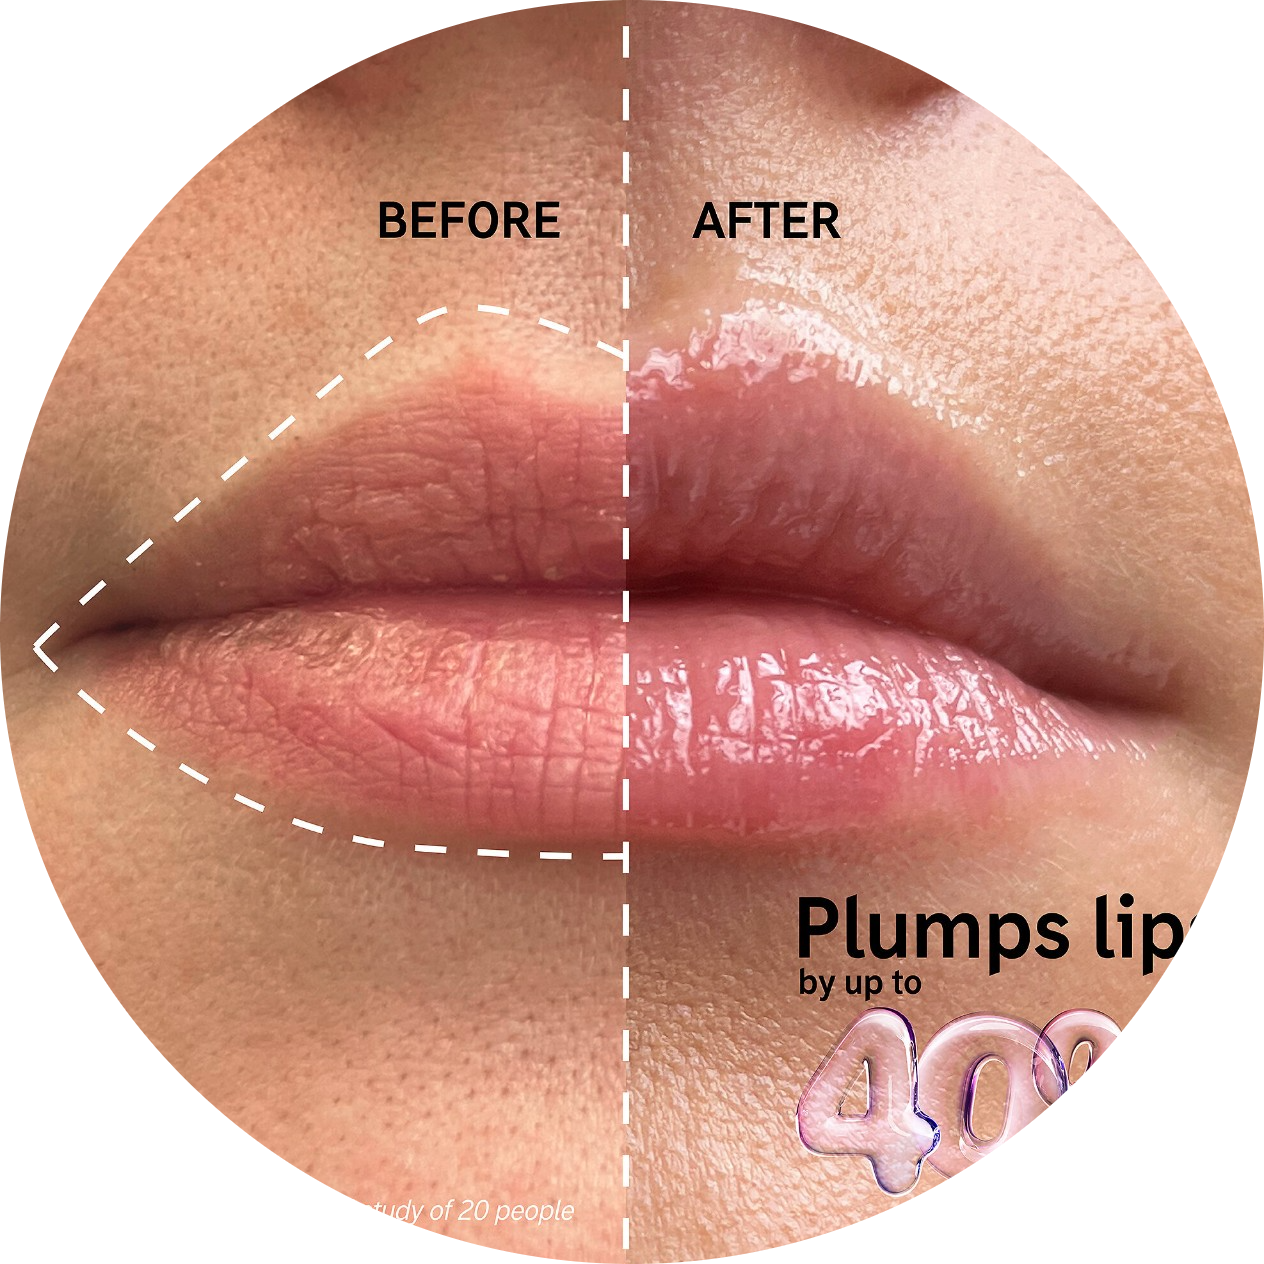 Tripeptide Plumping Lip Balm - NudeFace Chile